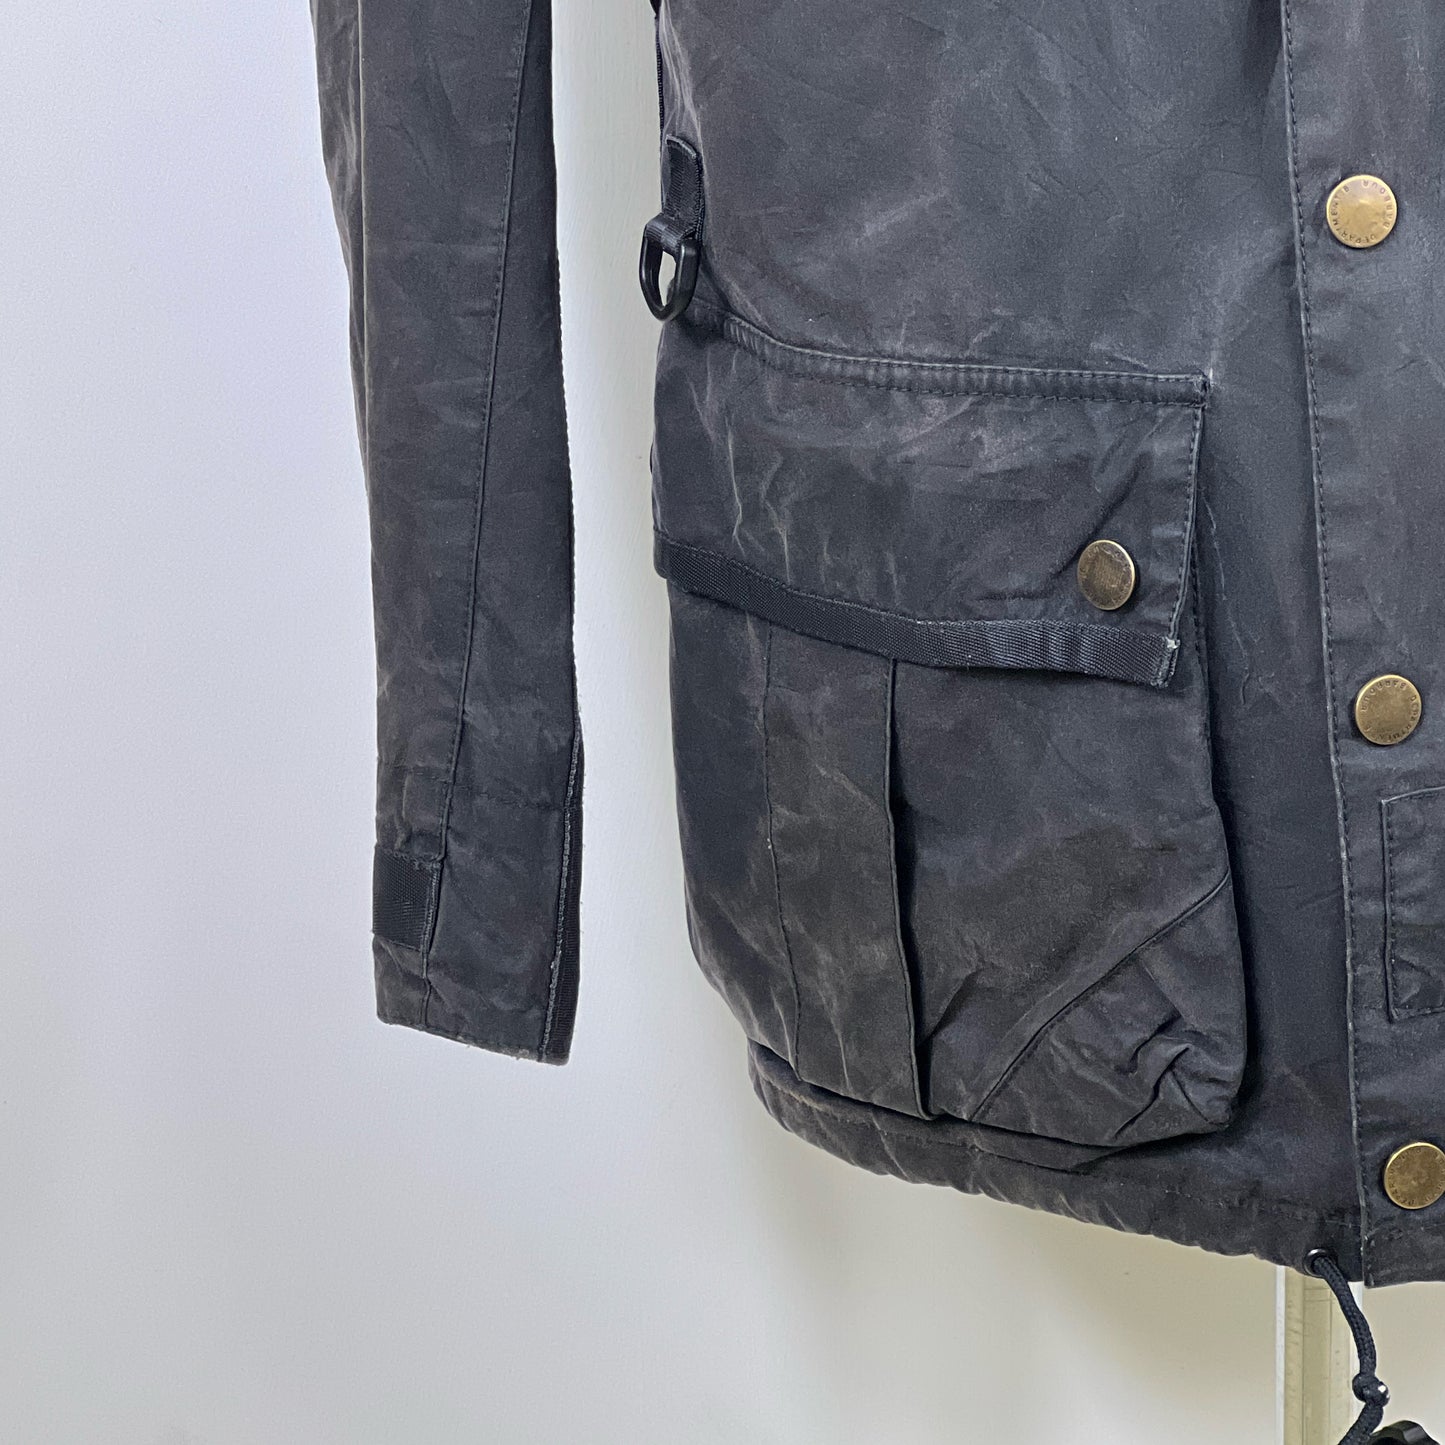 Giacca Barbour Dept B nera Sonar wax jacket Large-Black Dept B Sonar waxed jacket size L